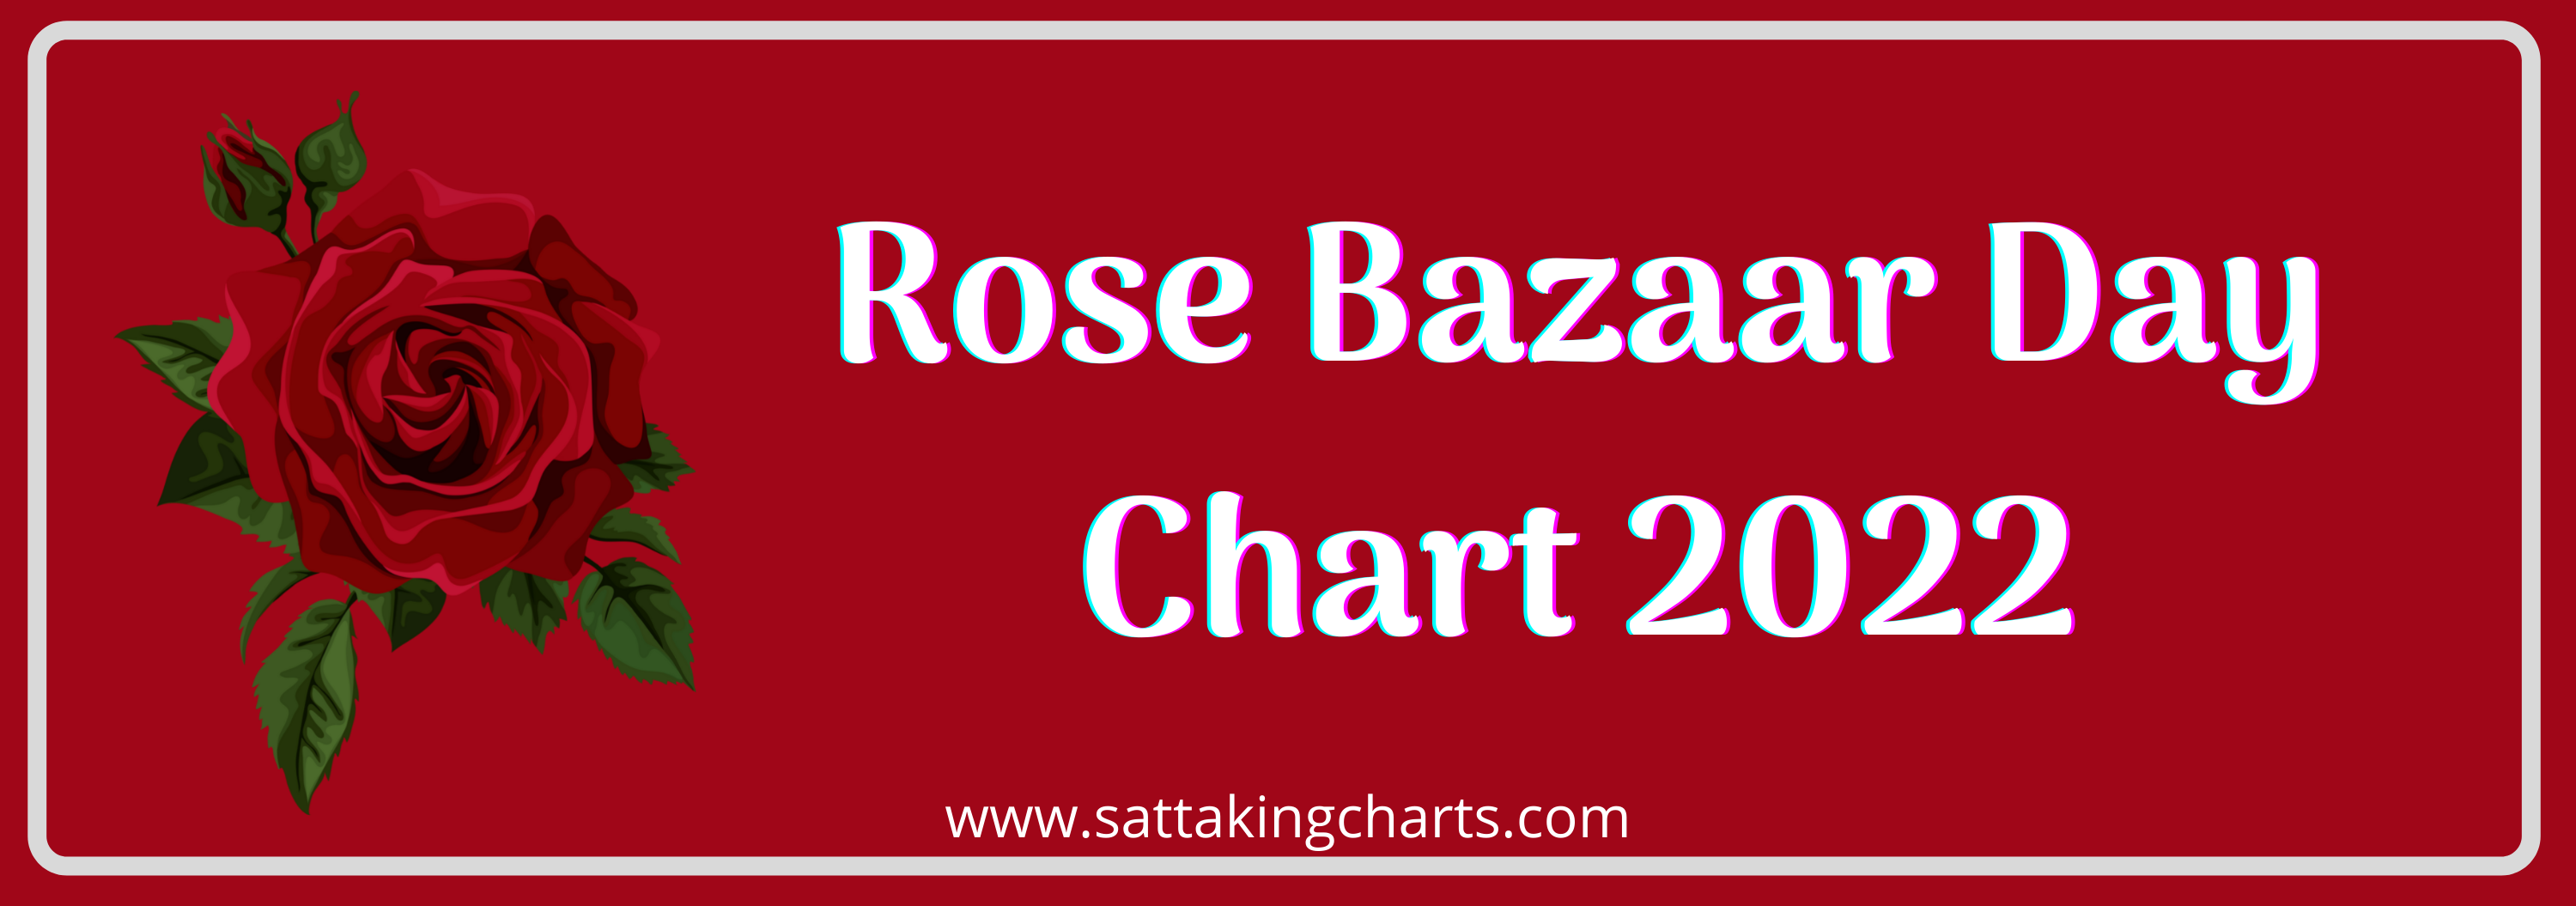 Rose Bazaar Day Chart 2022